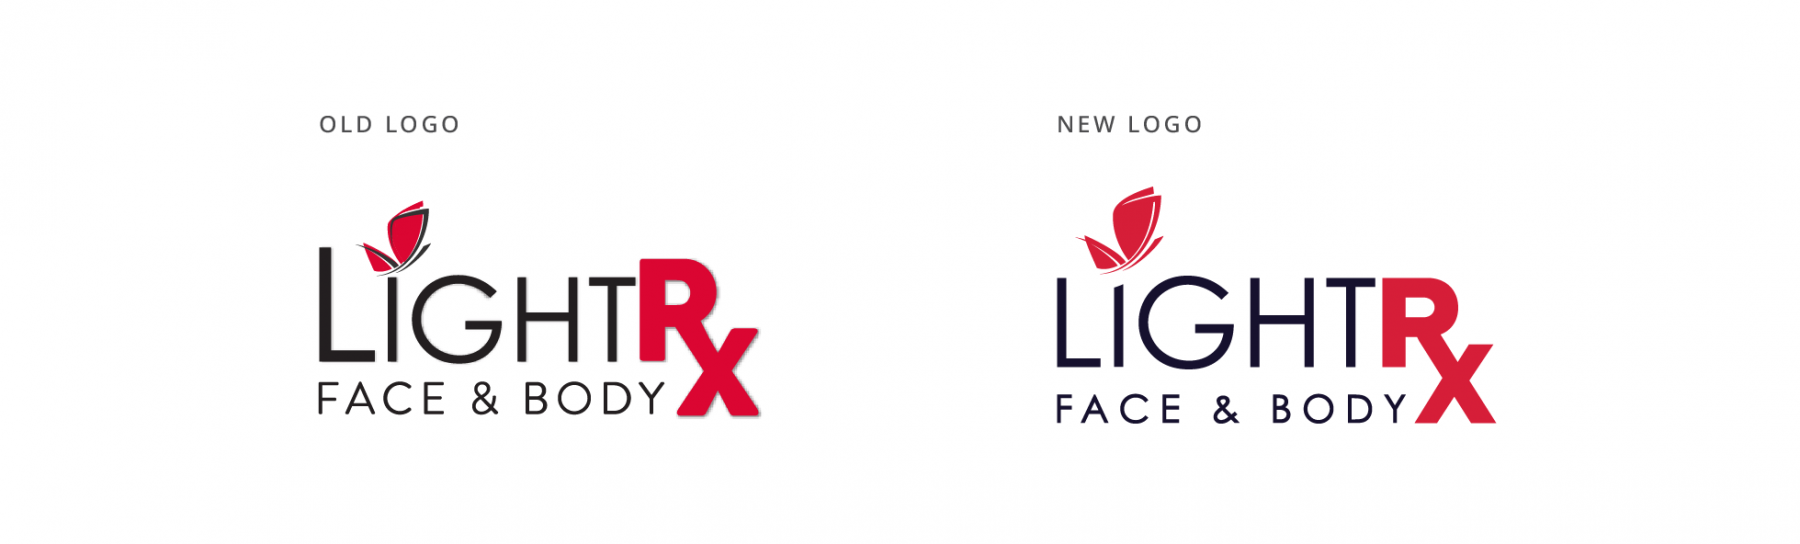 former LightRx logo versus new LightRx logo for brand refresh